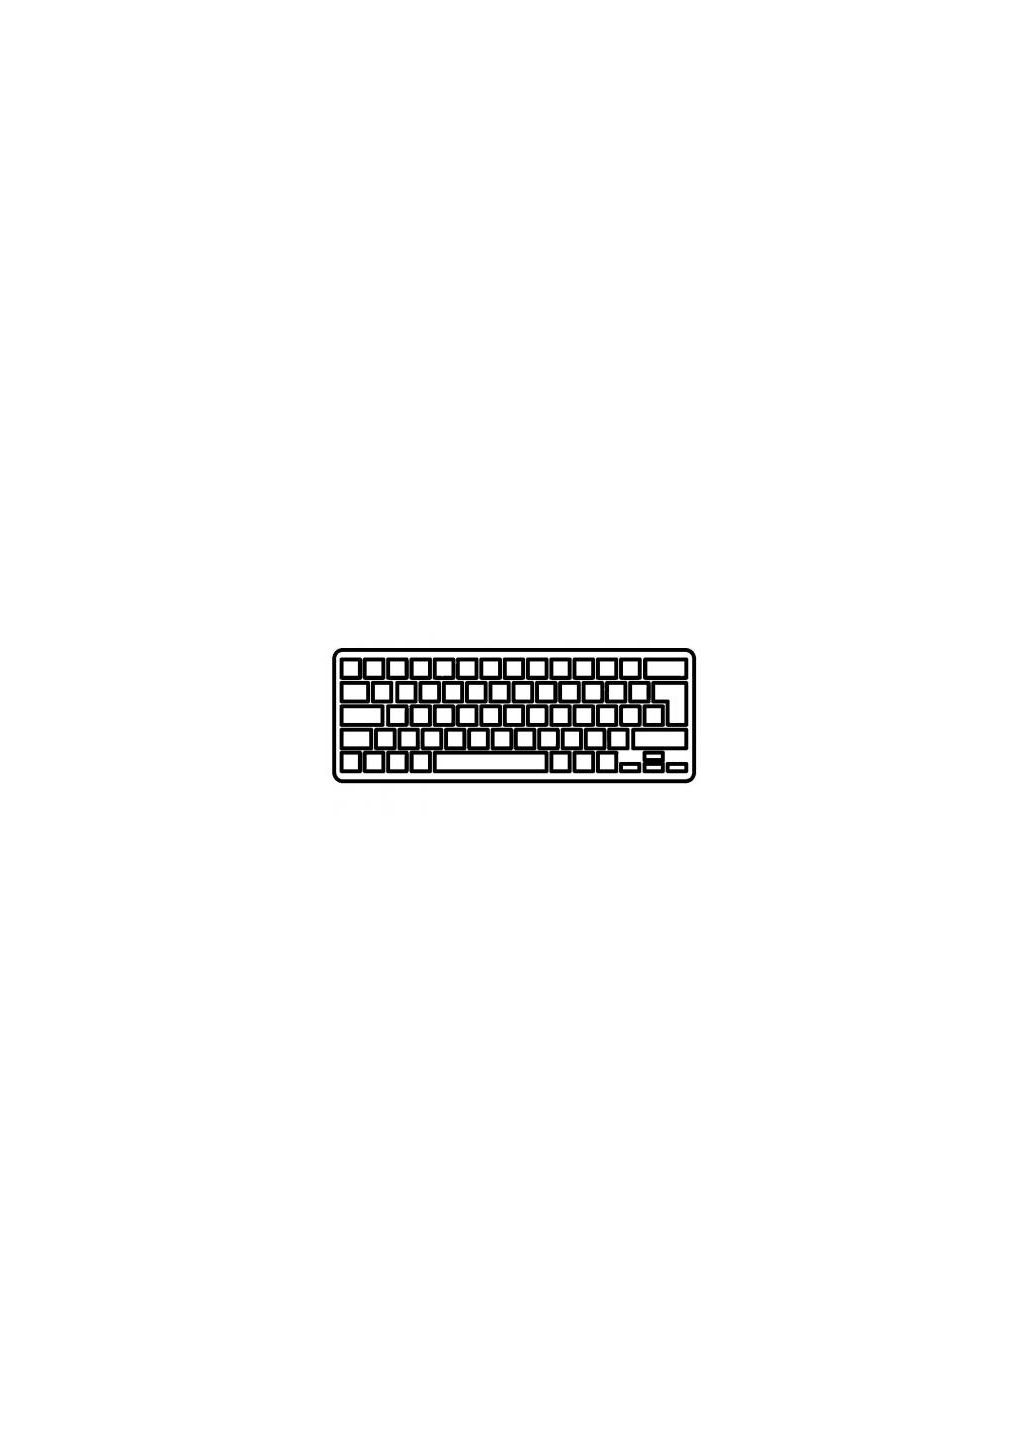 Клавиатура ноутбука (A43336) MSI s11/s420/s425/s430/s450/m645/m655/m660/k1 белая ua (276708062)